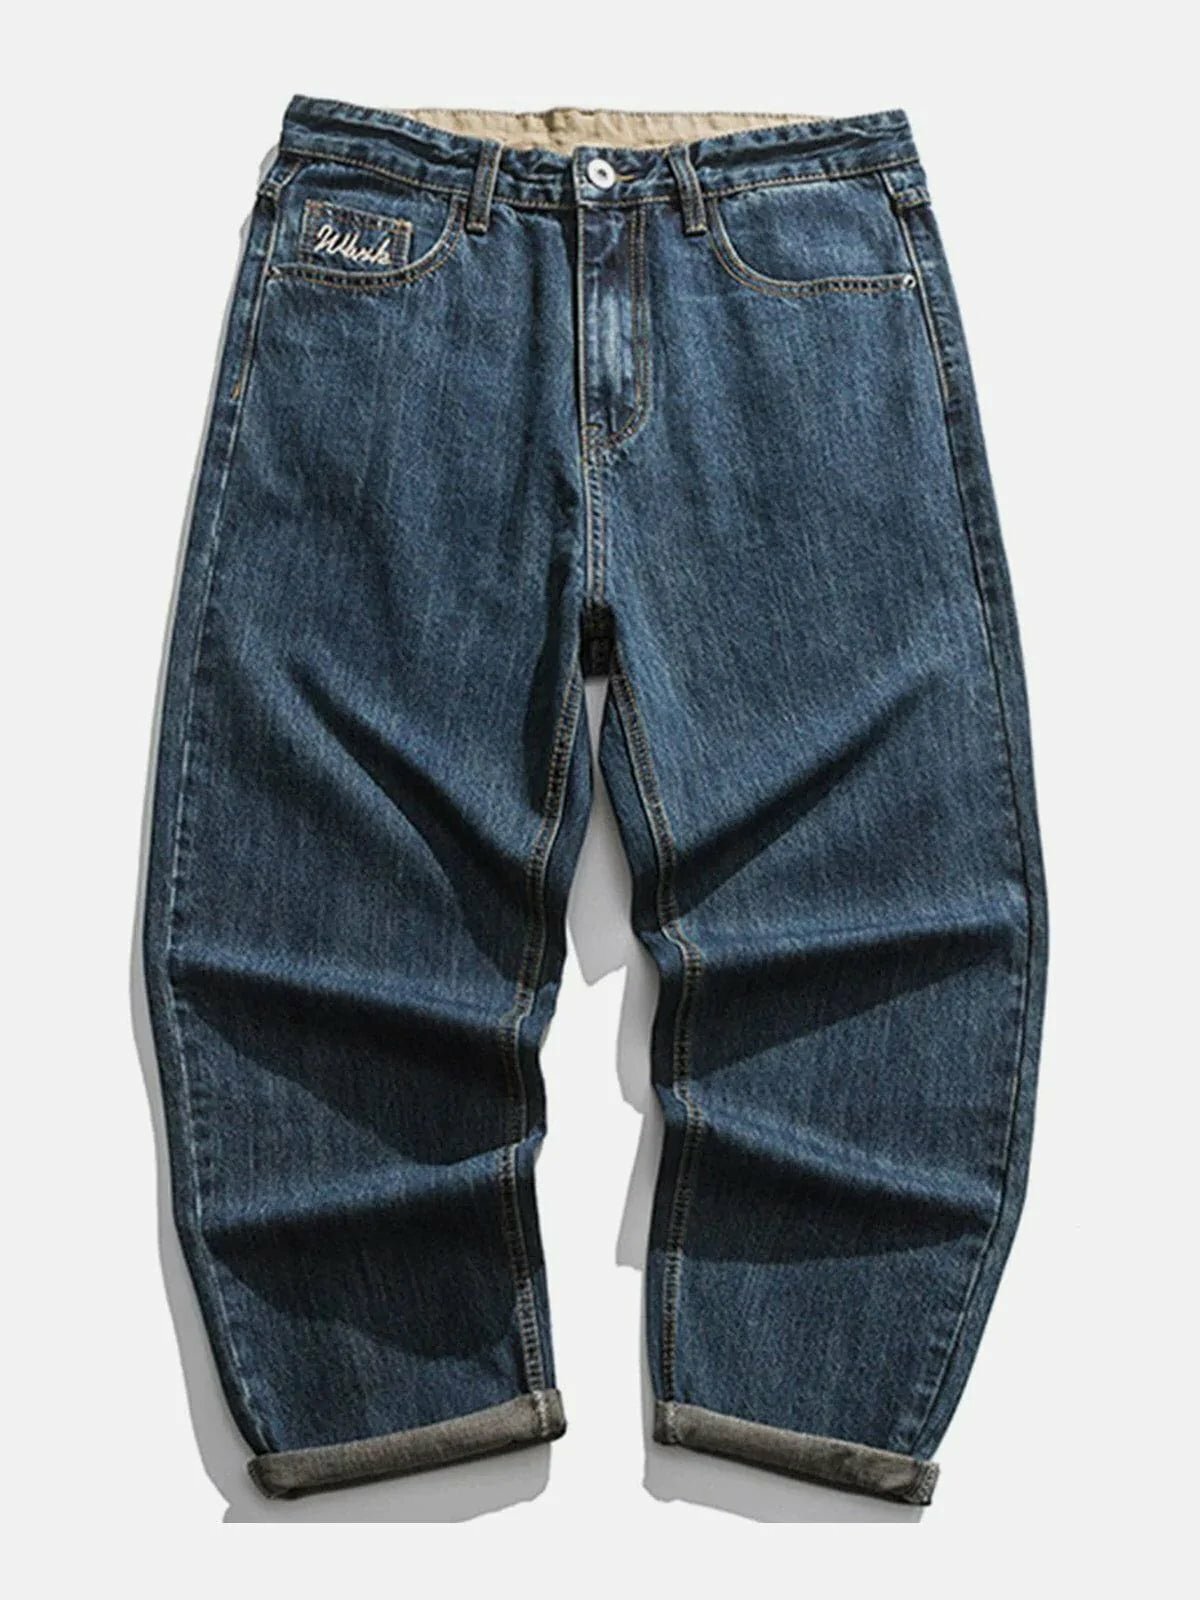 patchwork bandana print jeans edgy streetwear essential 5833